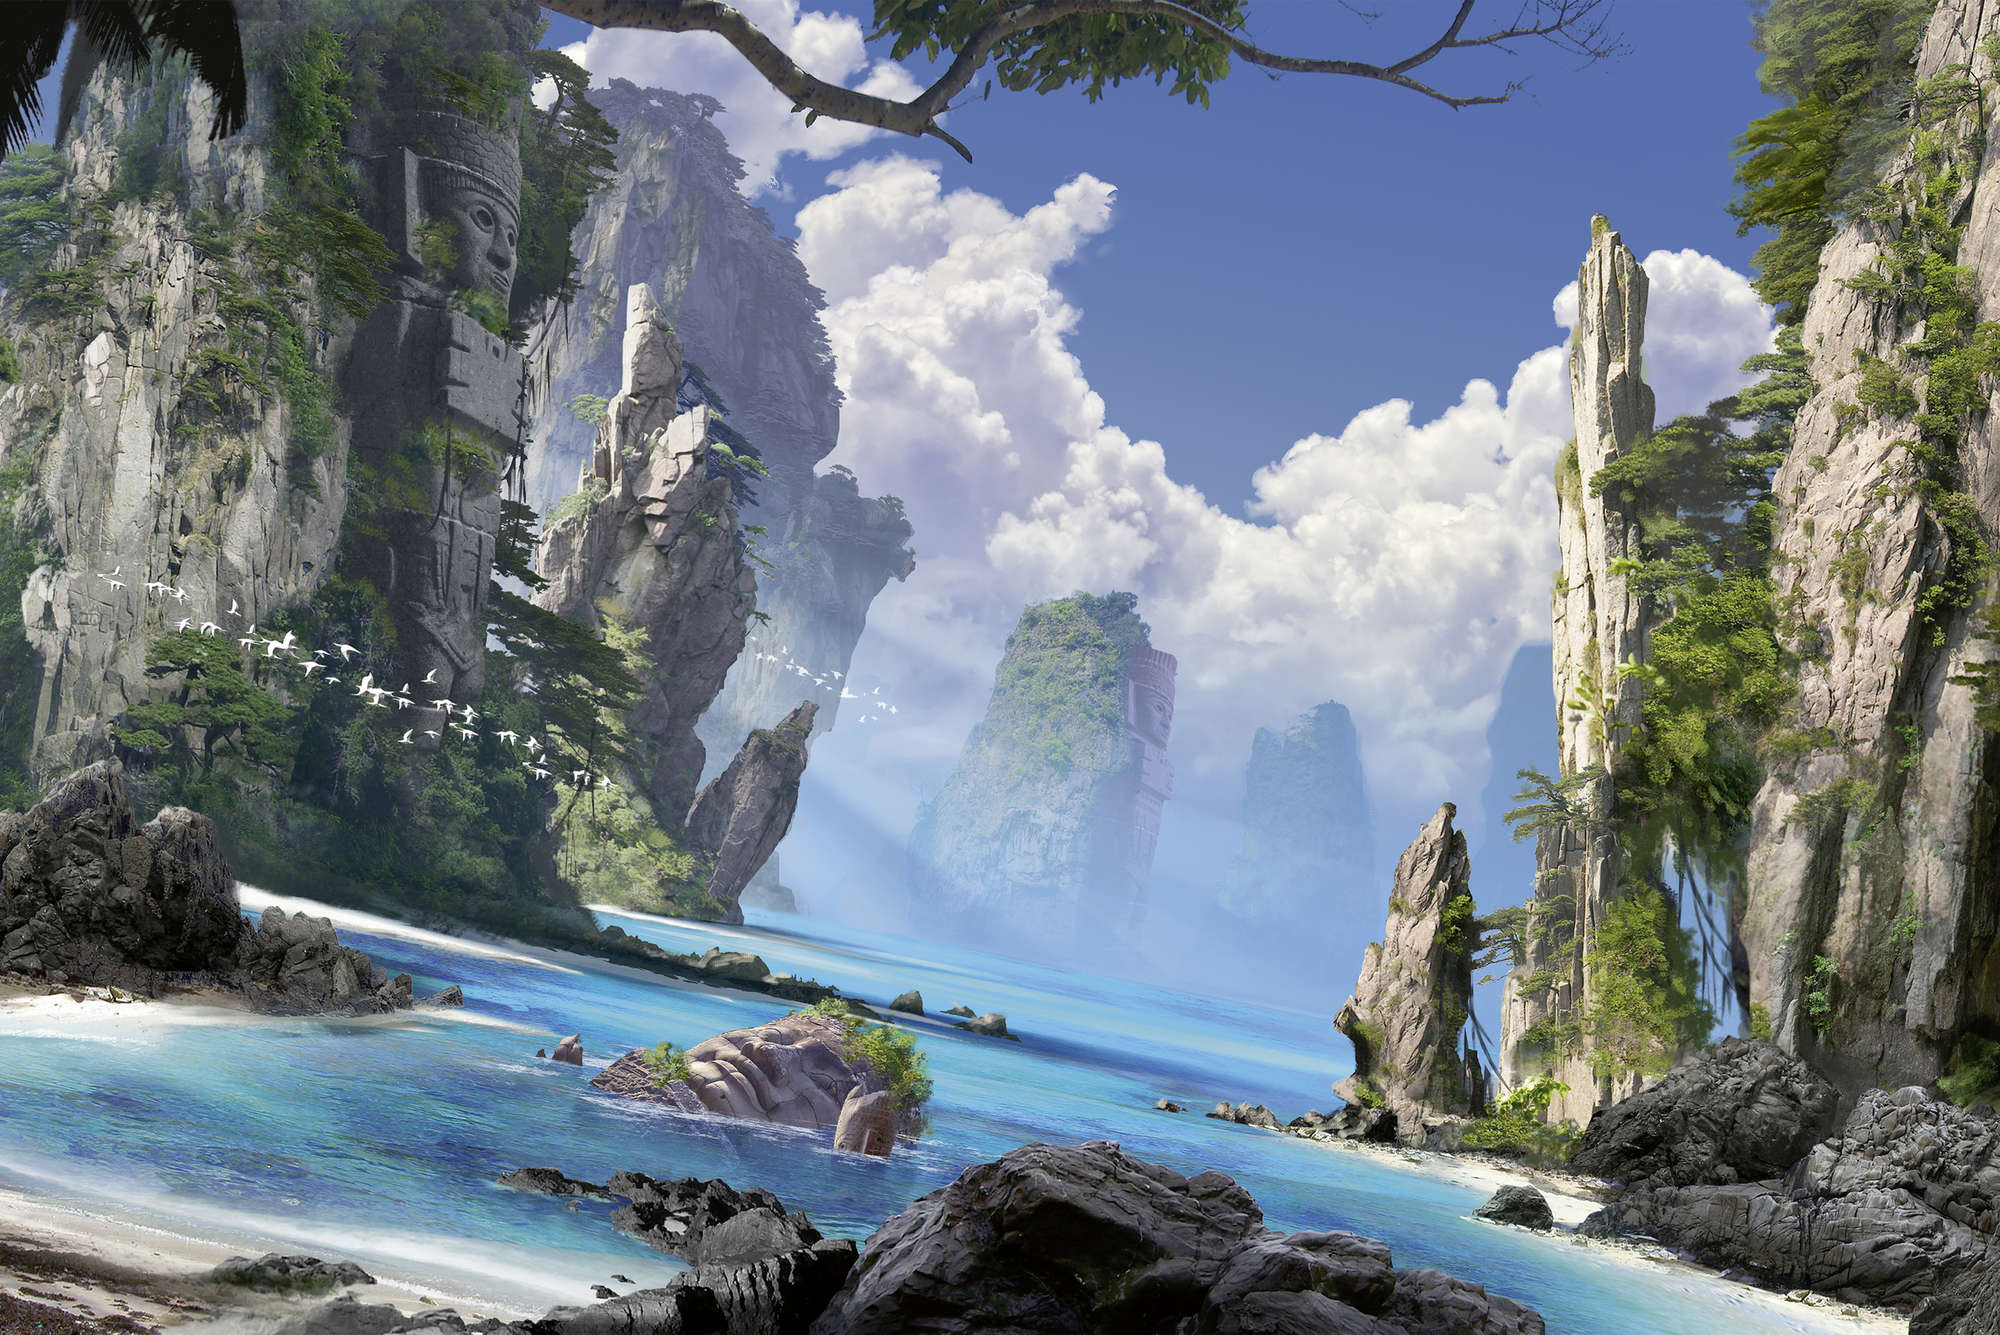             Digital behang Fantasiewereld met Baai en Kliffen - Strukturenvlies
        